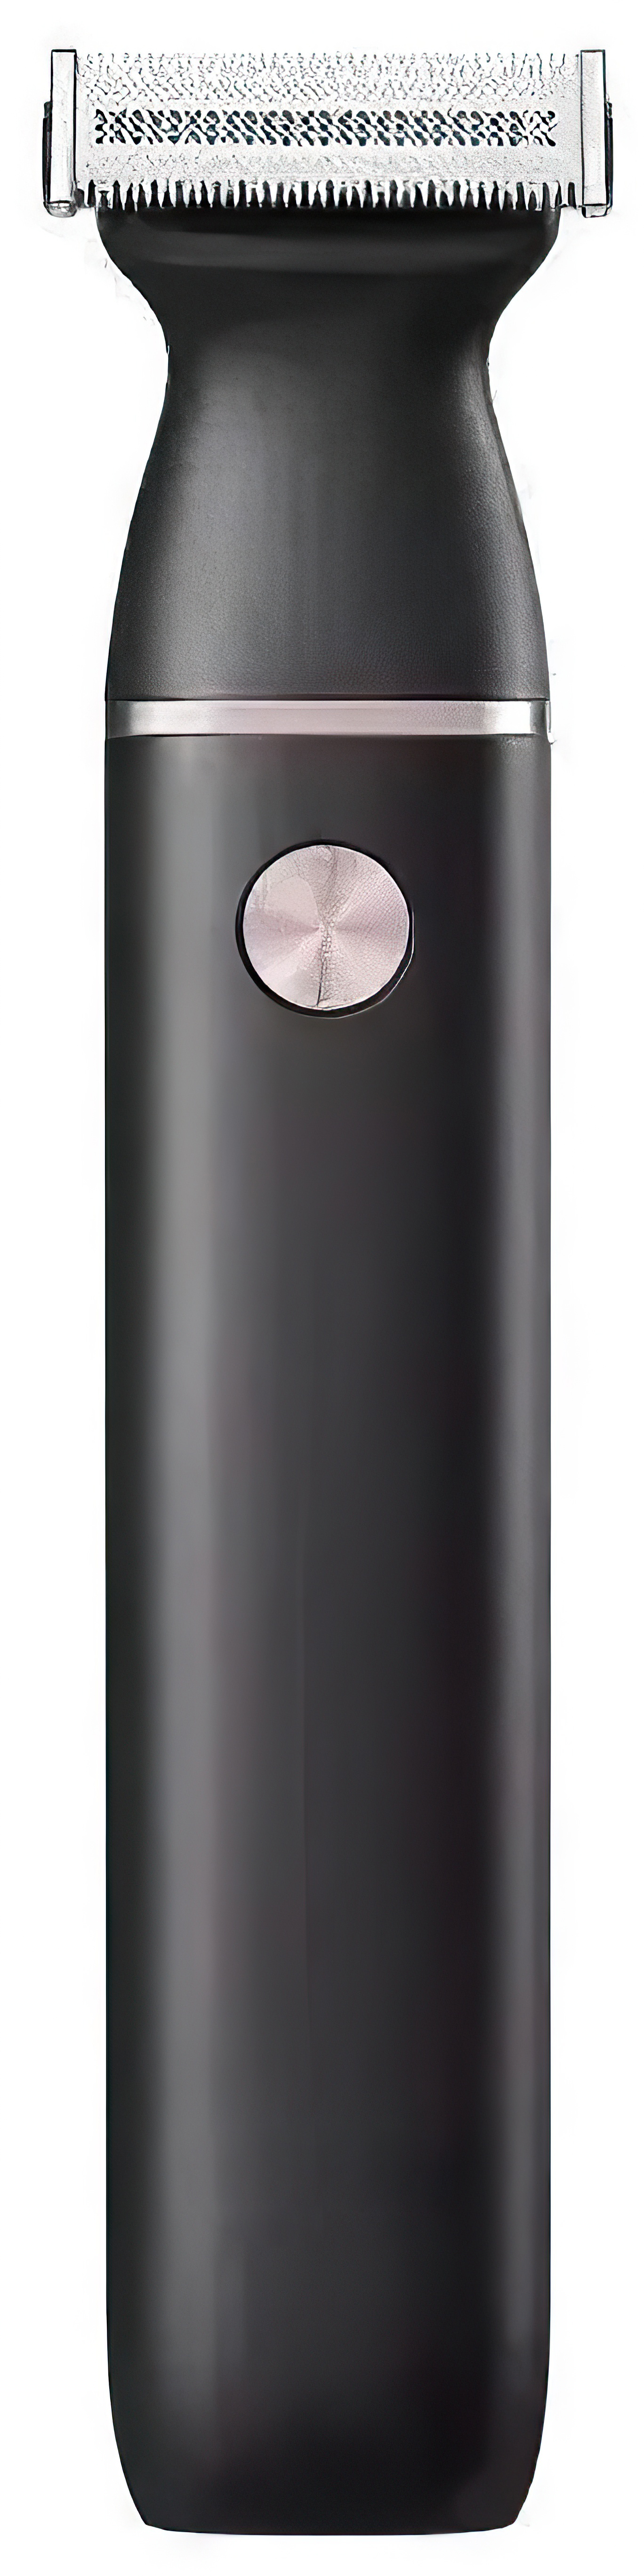 Электробритва Xiaomi Electric Shaver Small Razor (ET2) электробритва htc gt 618